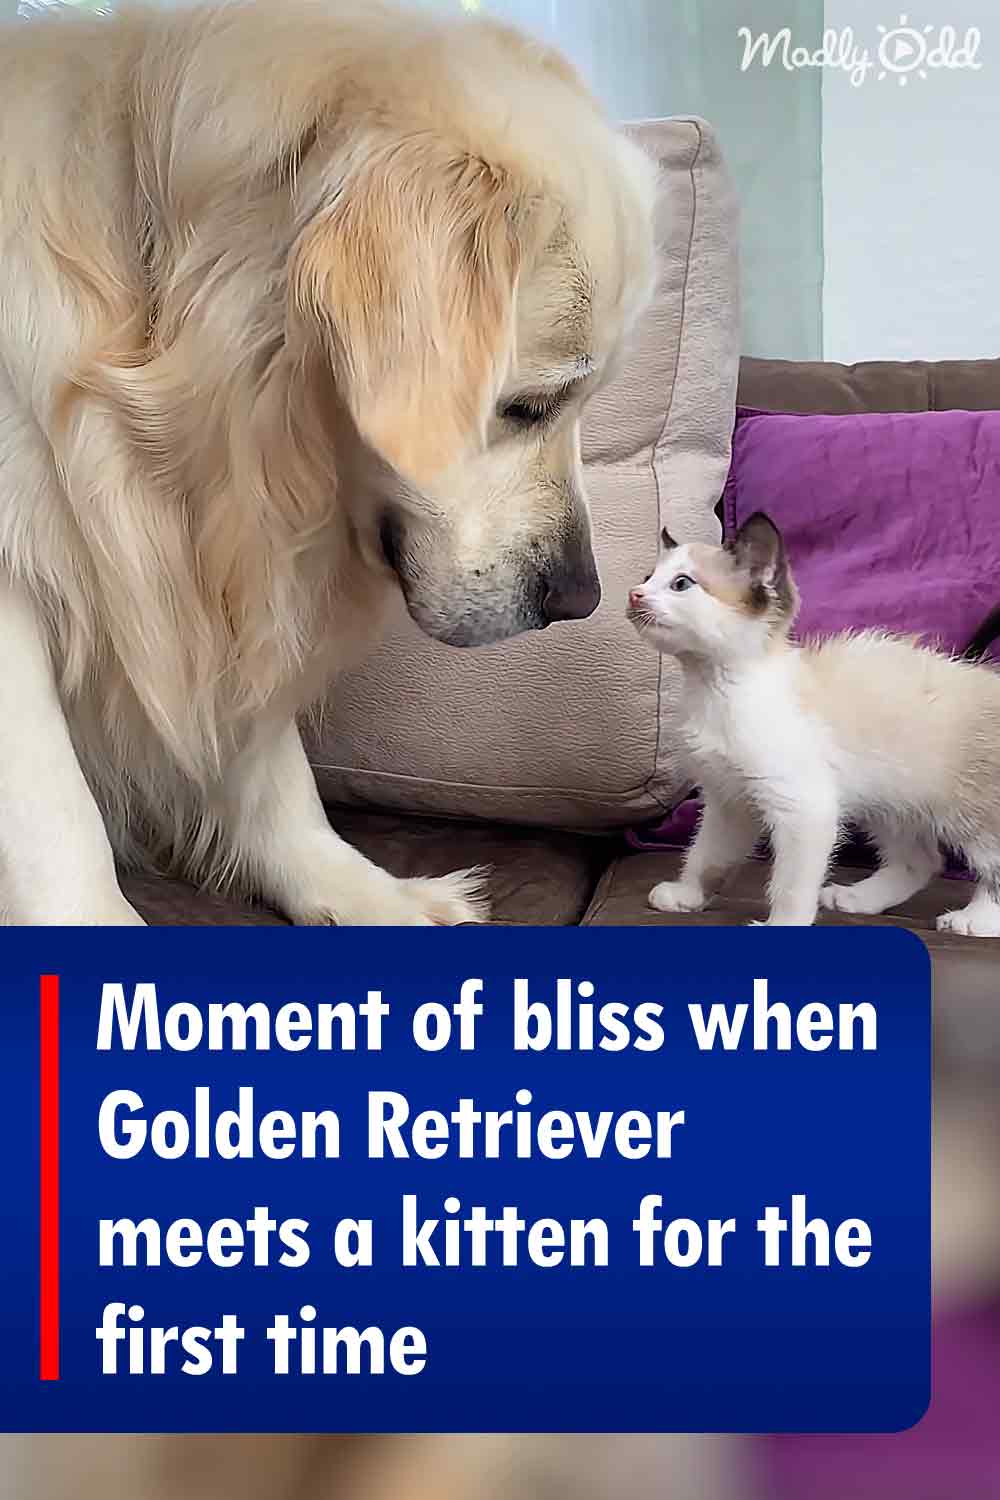 Moment of bliss when Golden Retriever meets a kitten for the first time